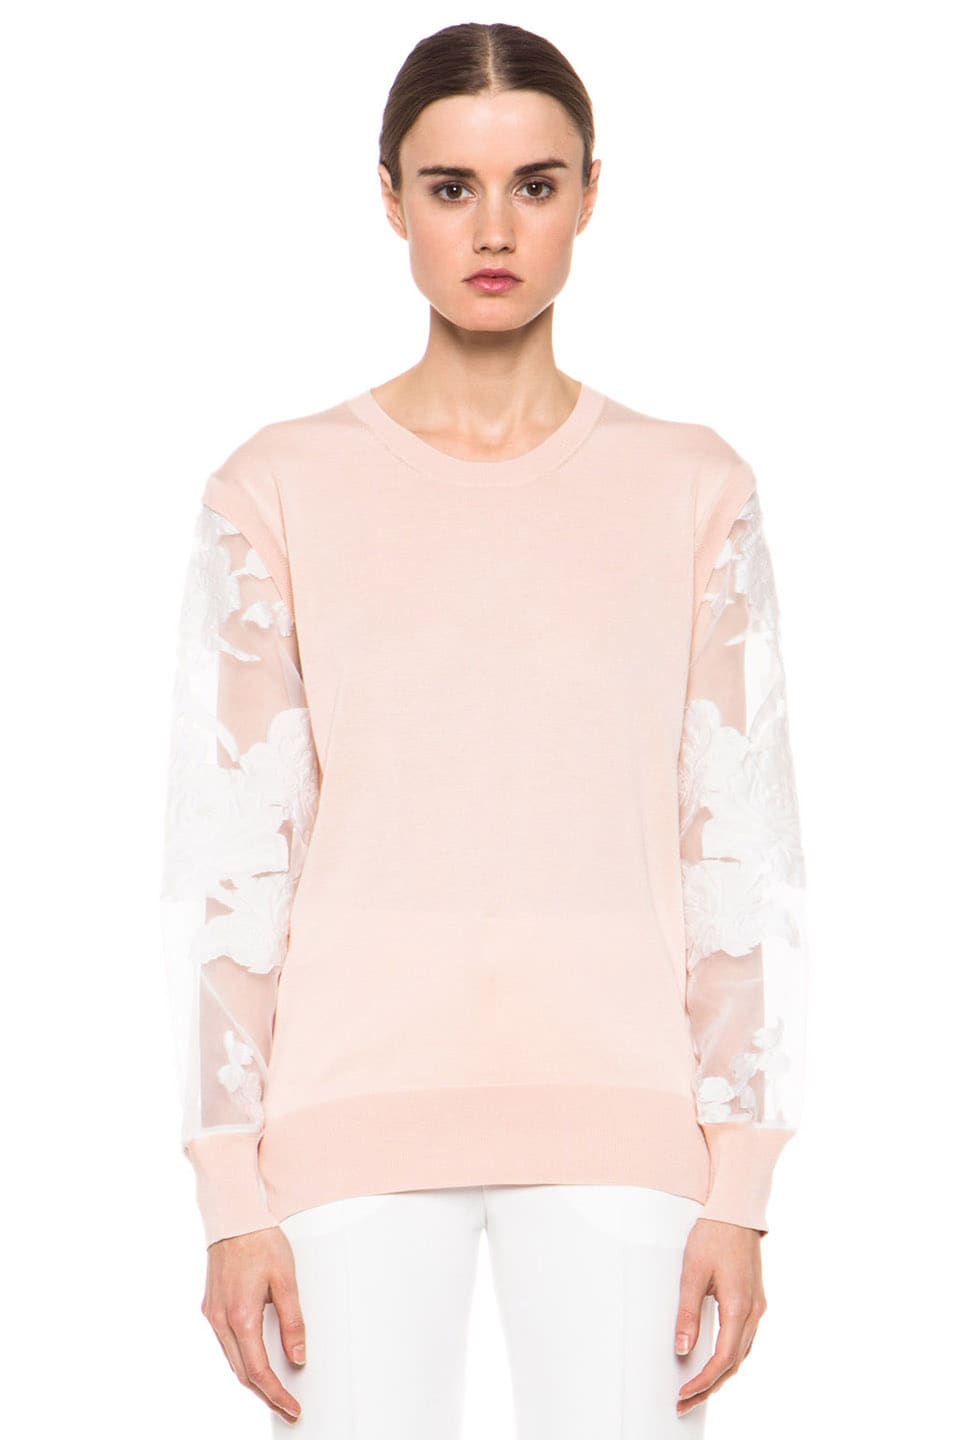 Chloe Flower Sleeve Pullover in Peach & White | FWRD